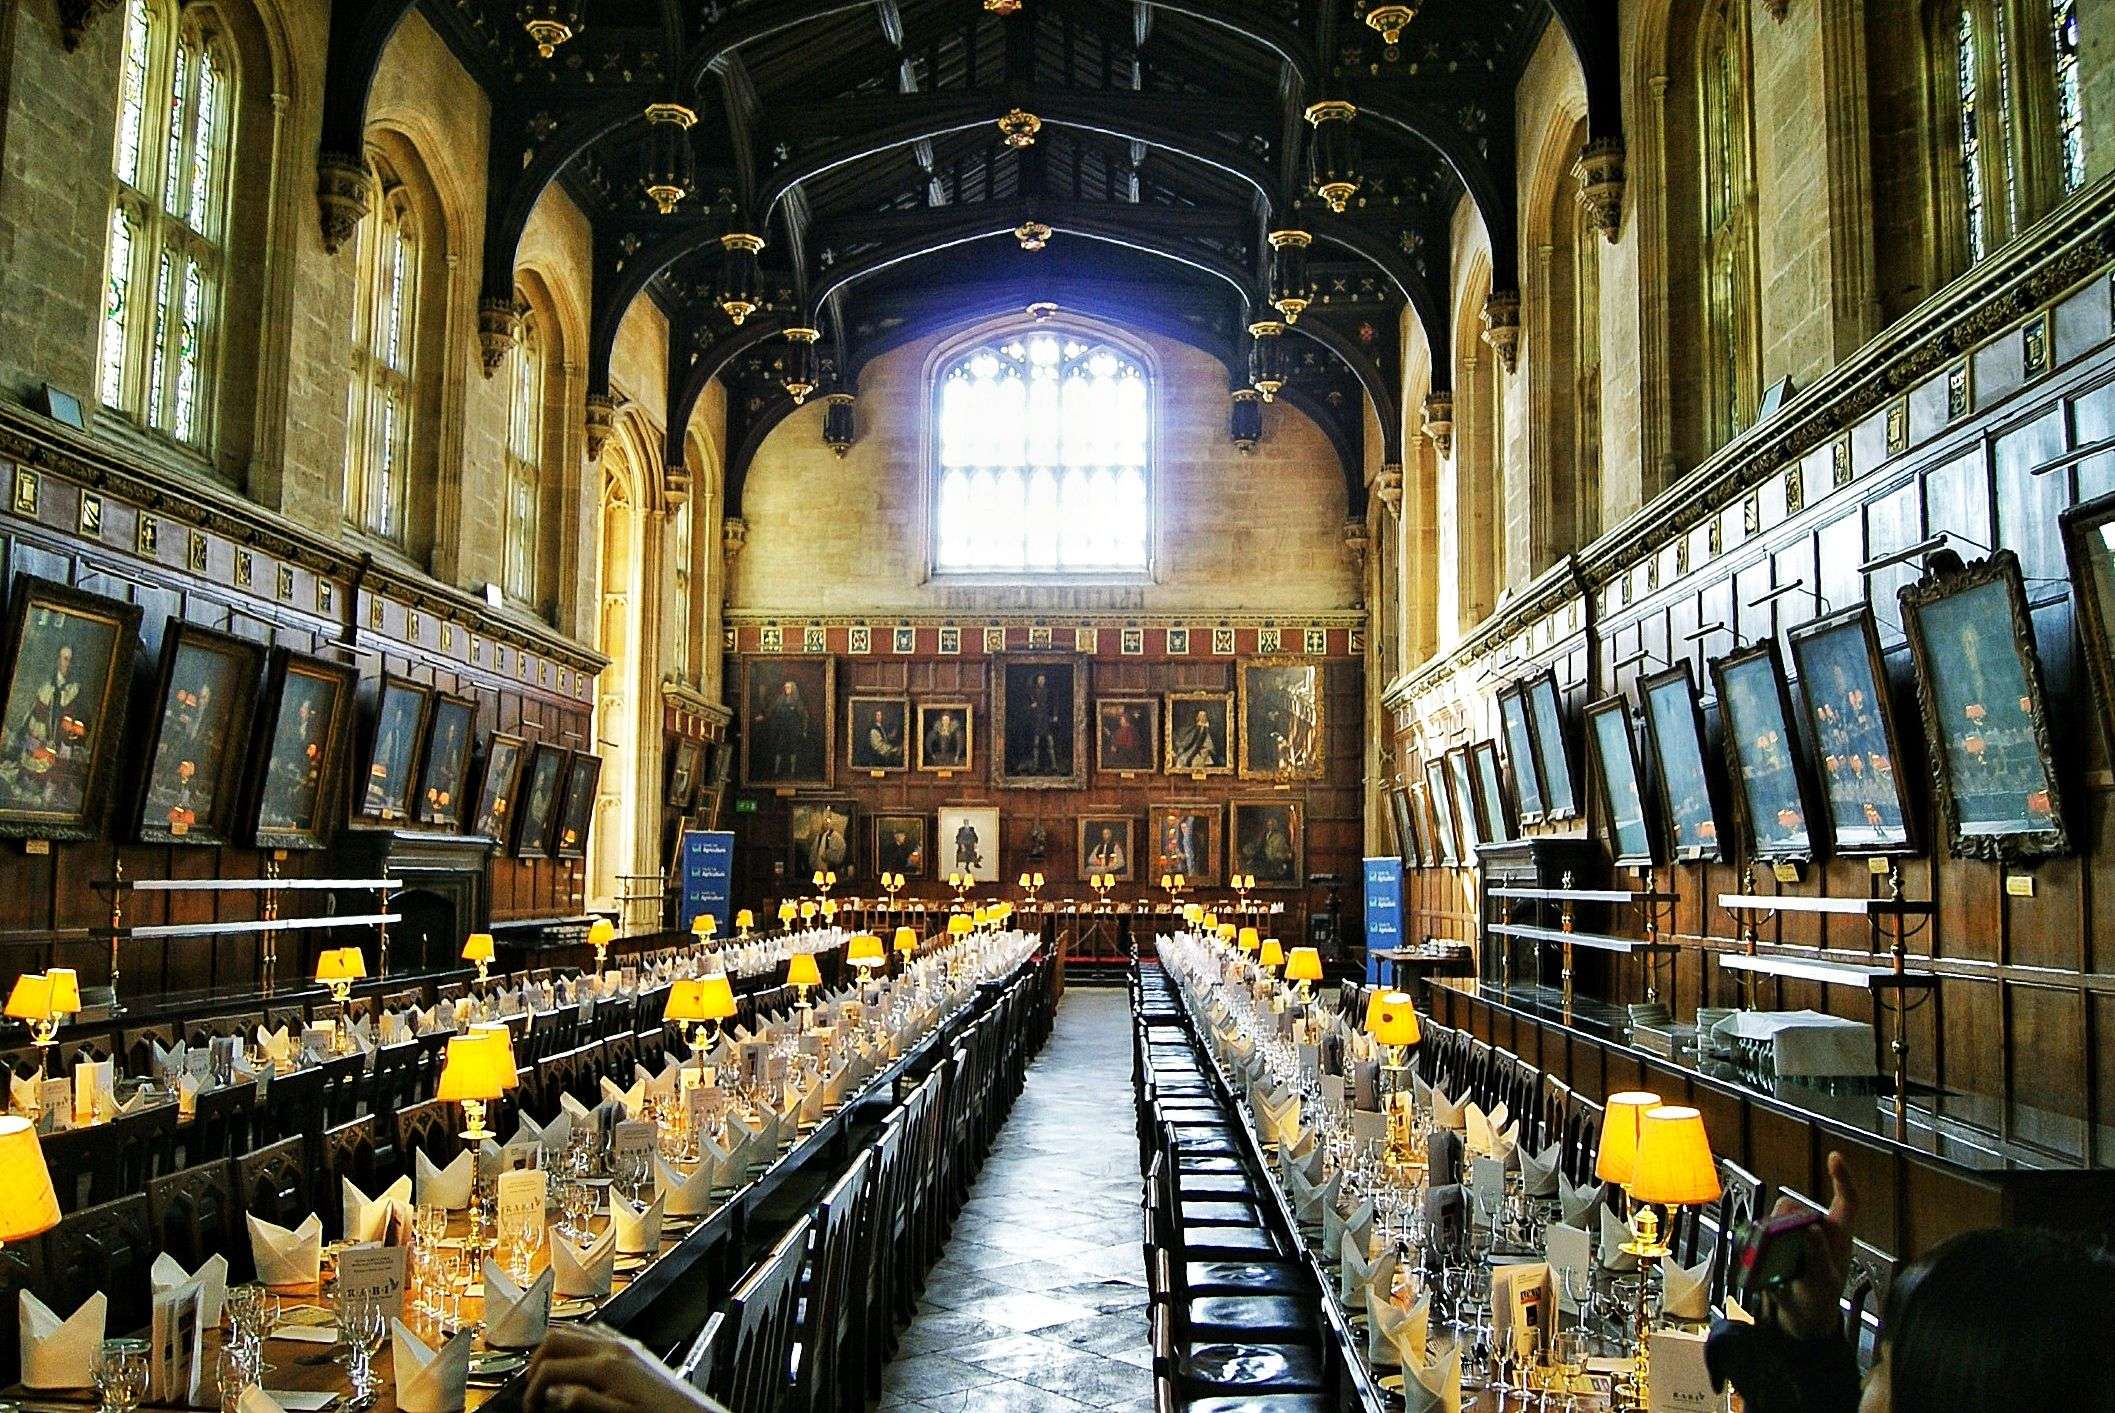 Christ Church. Harry Potter Film Location. Oxford, England.